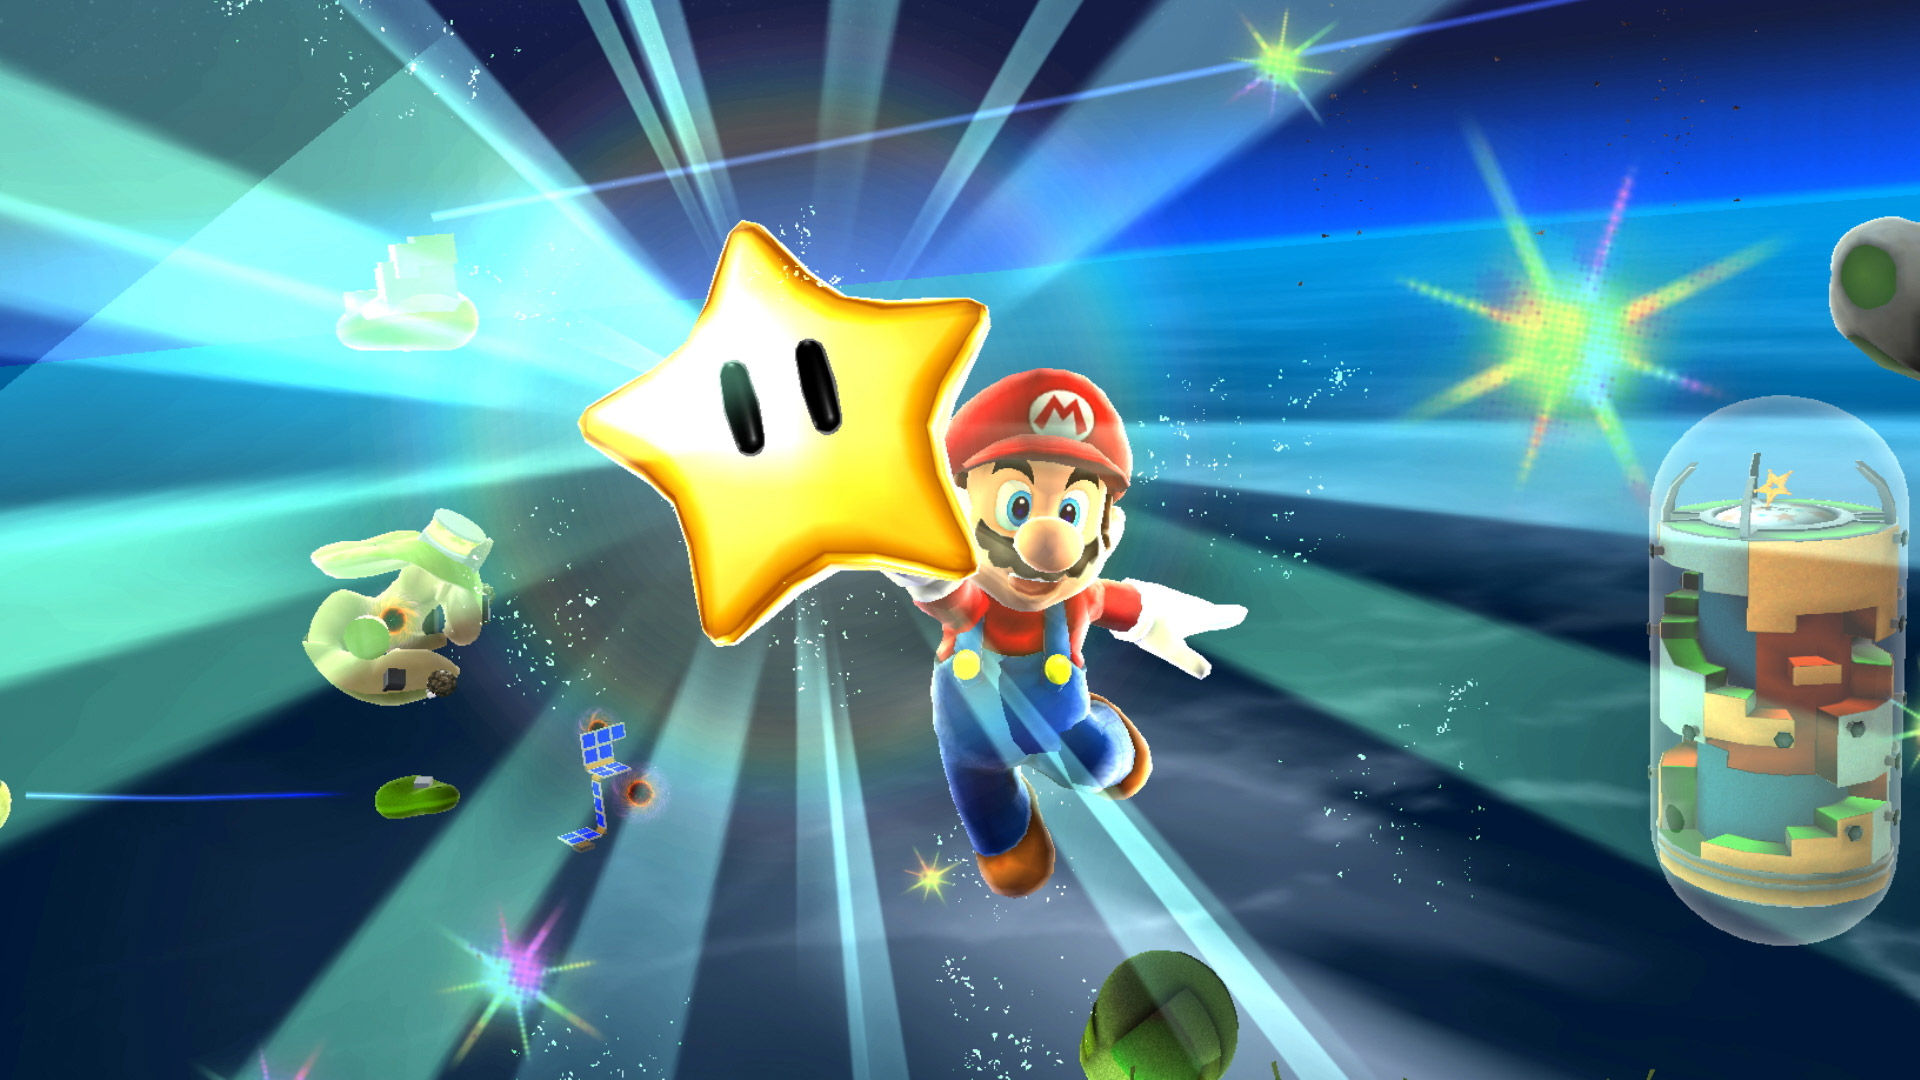 Super Mario 3D All-Stars Nintendo Switch / Nintendo Switch Online Family  Membership 12 Month Code 